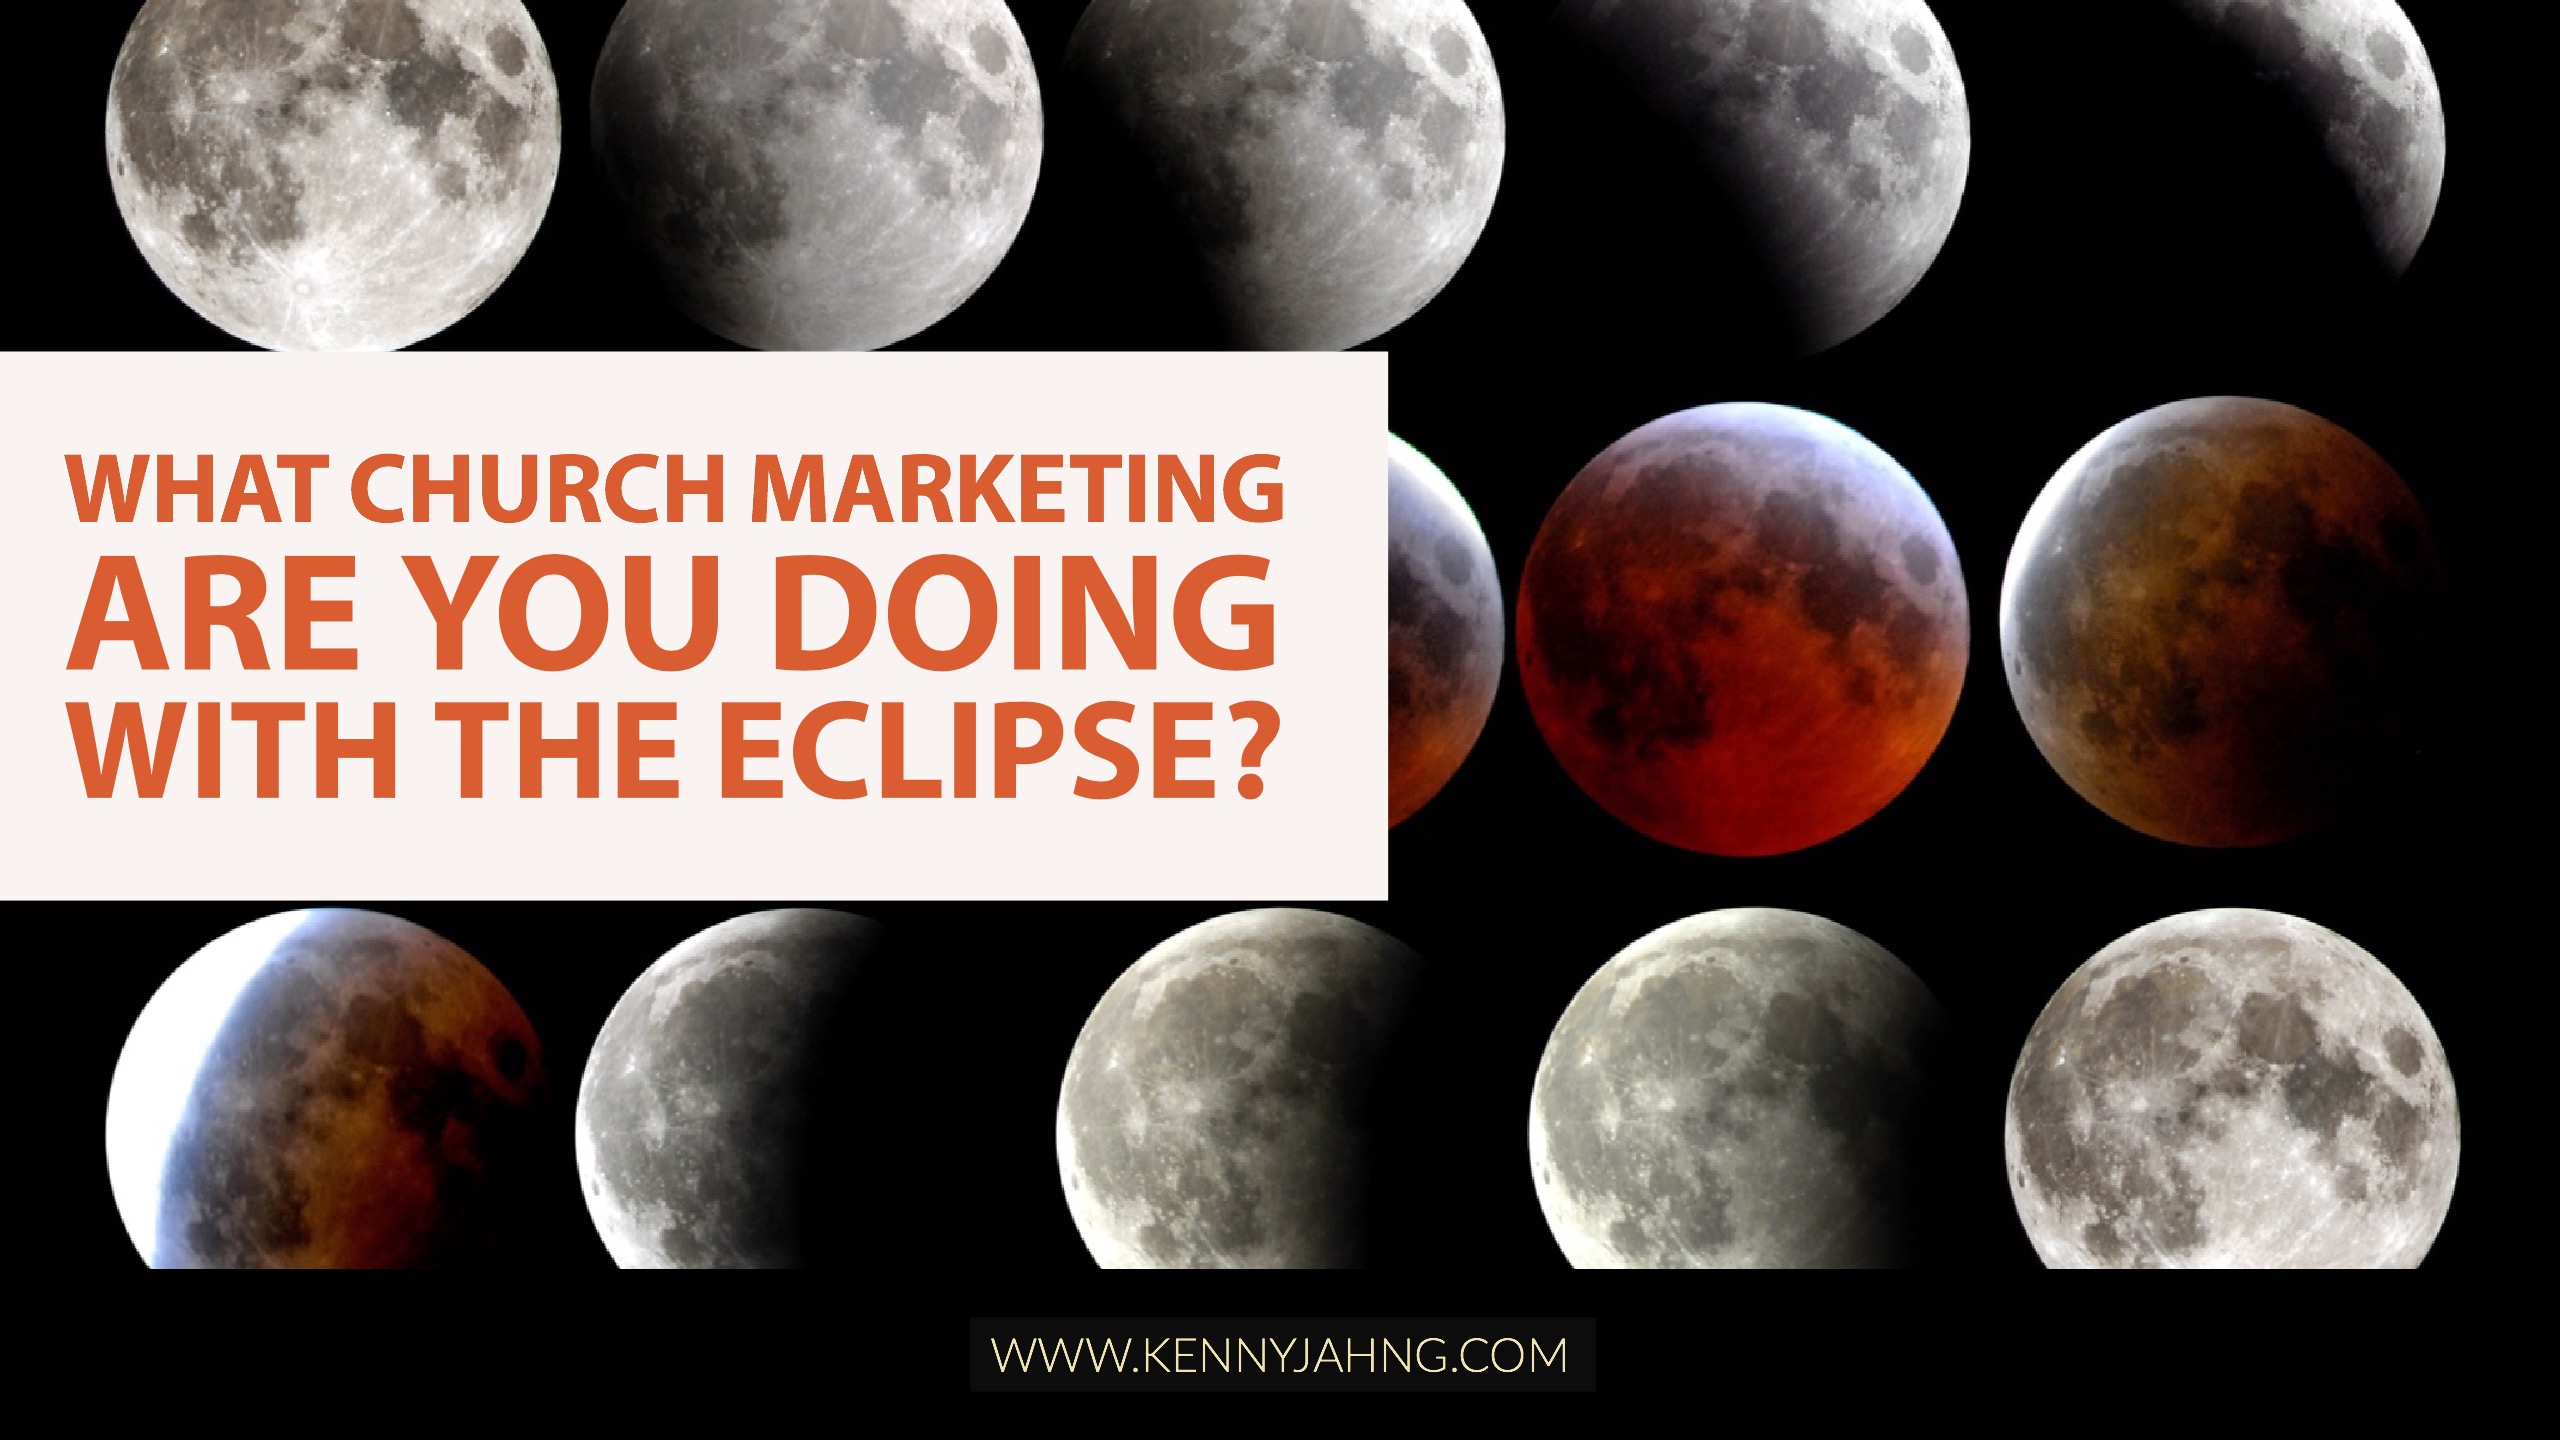 solar eclipse 2017 and church marketing